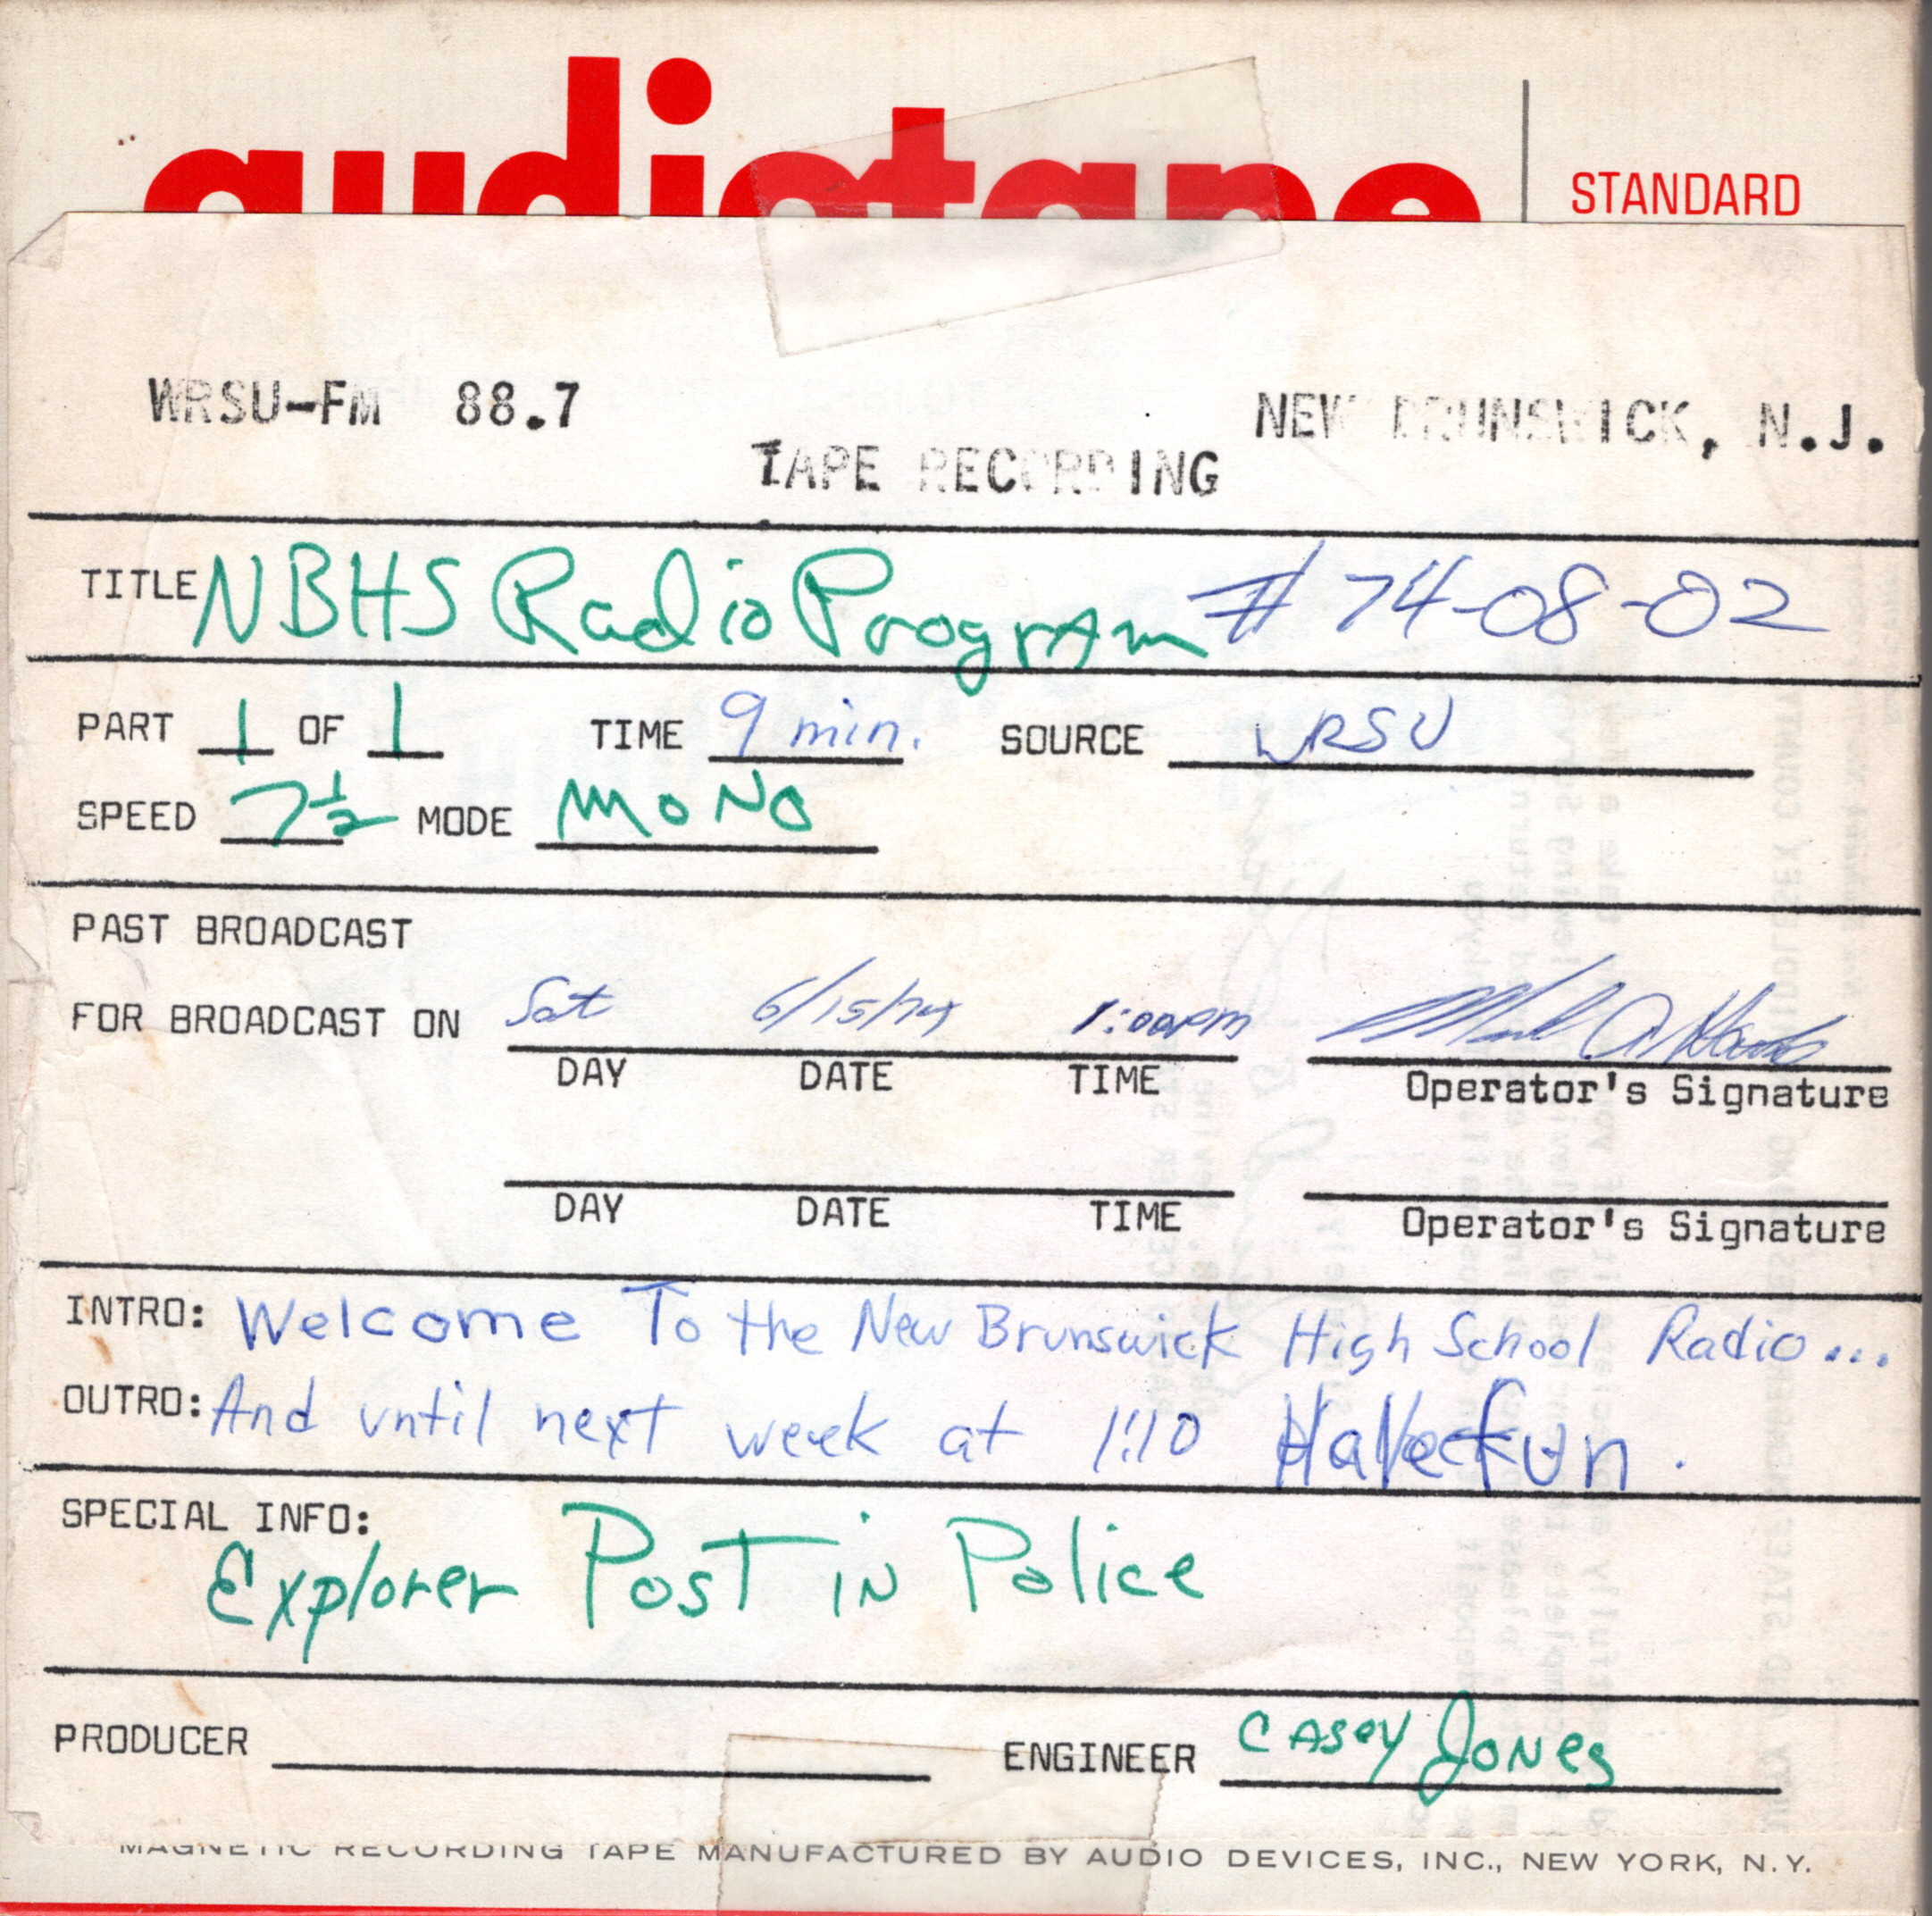 New Brunswick High School Program - Broadcast by WRSU-FM - June 15 1974